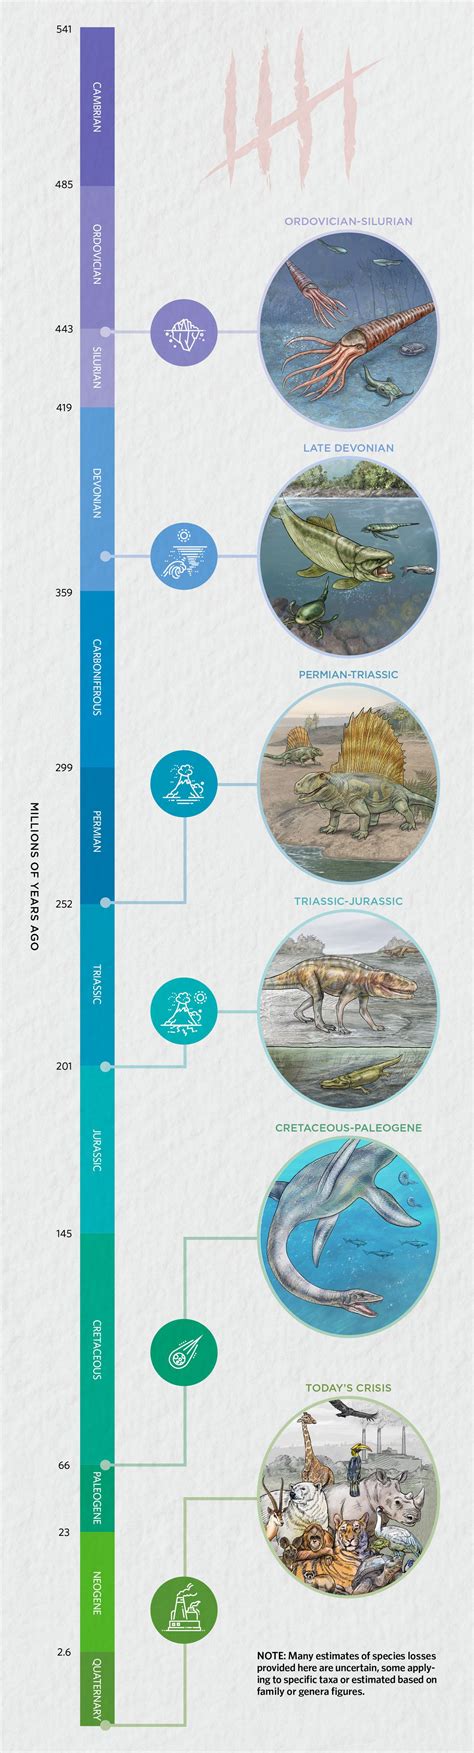 infographic     big  mass extinctions ts digest